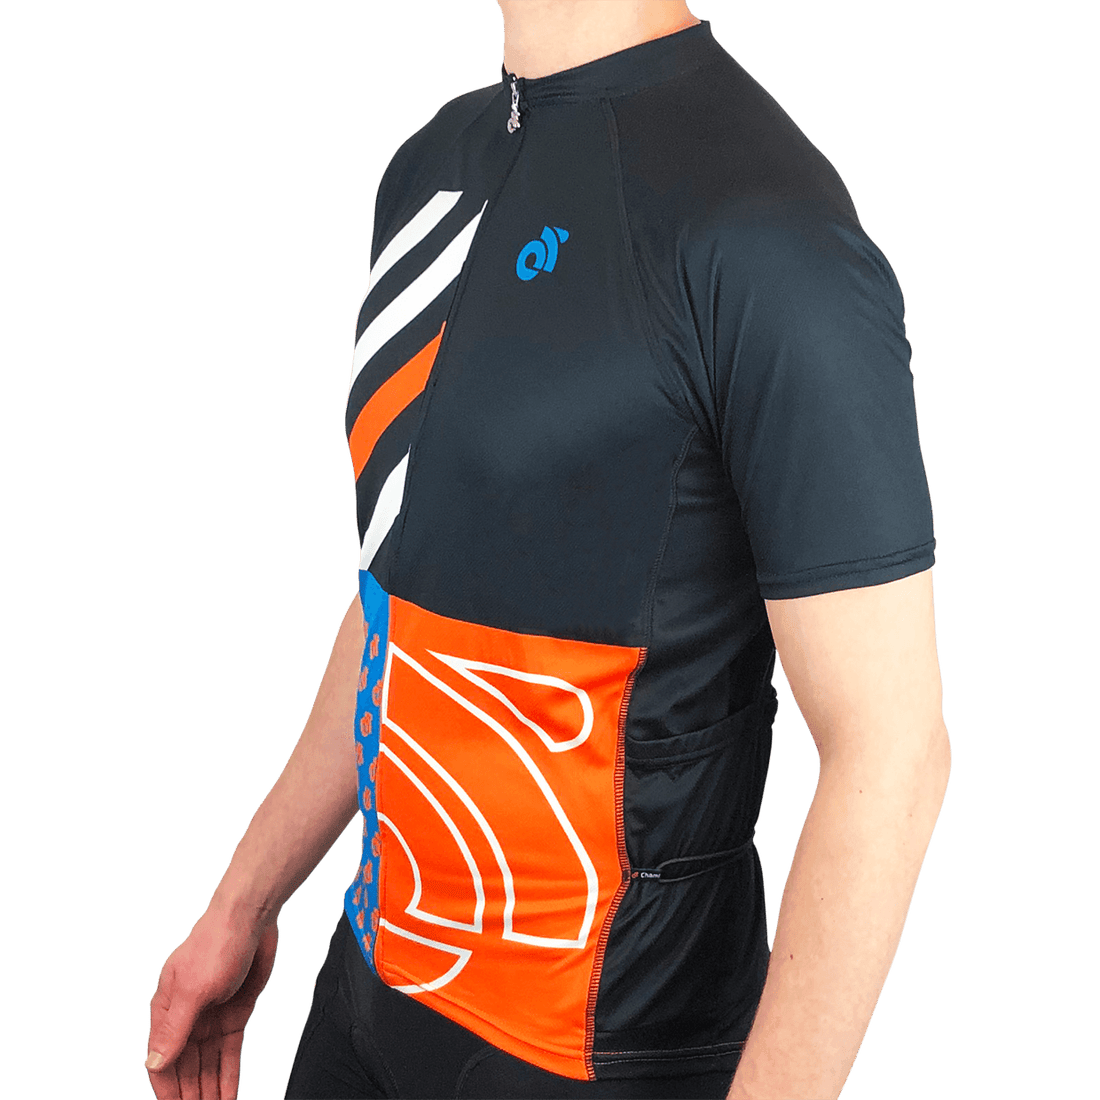 Performance Ultra Race Top - short sleeve